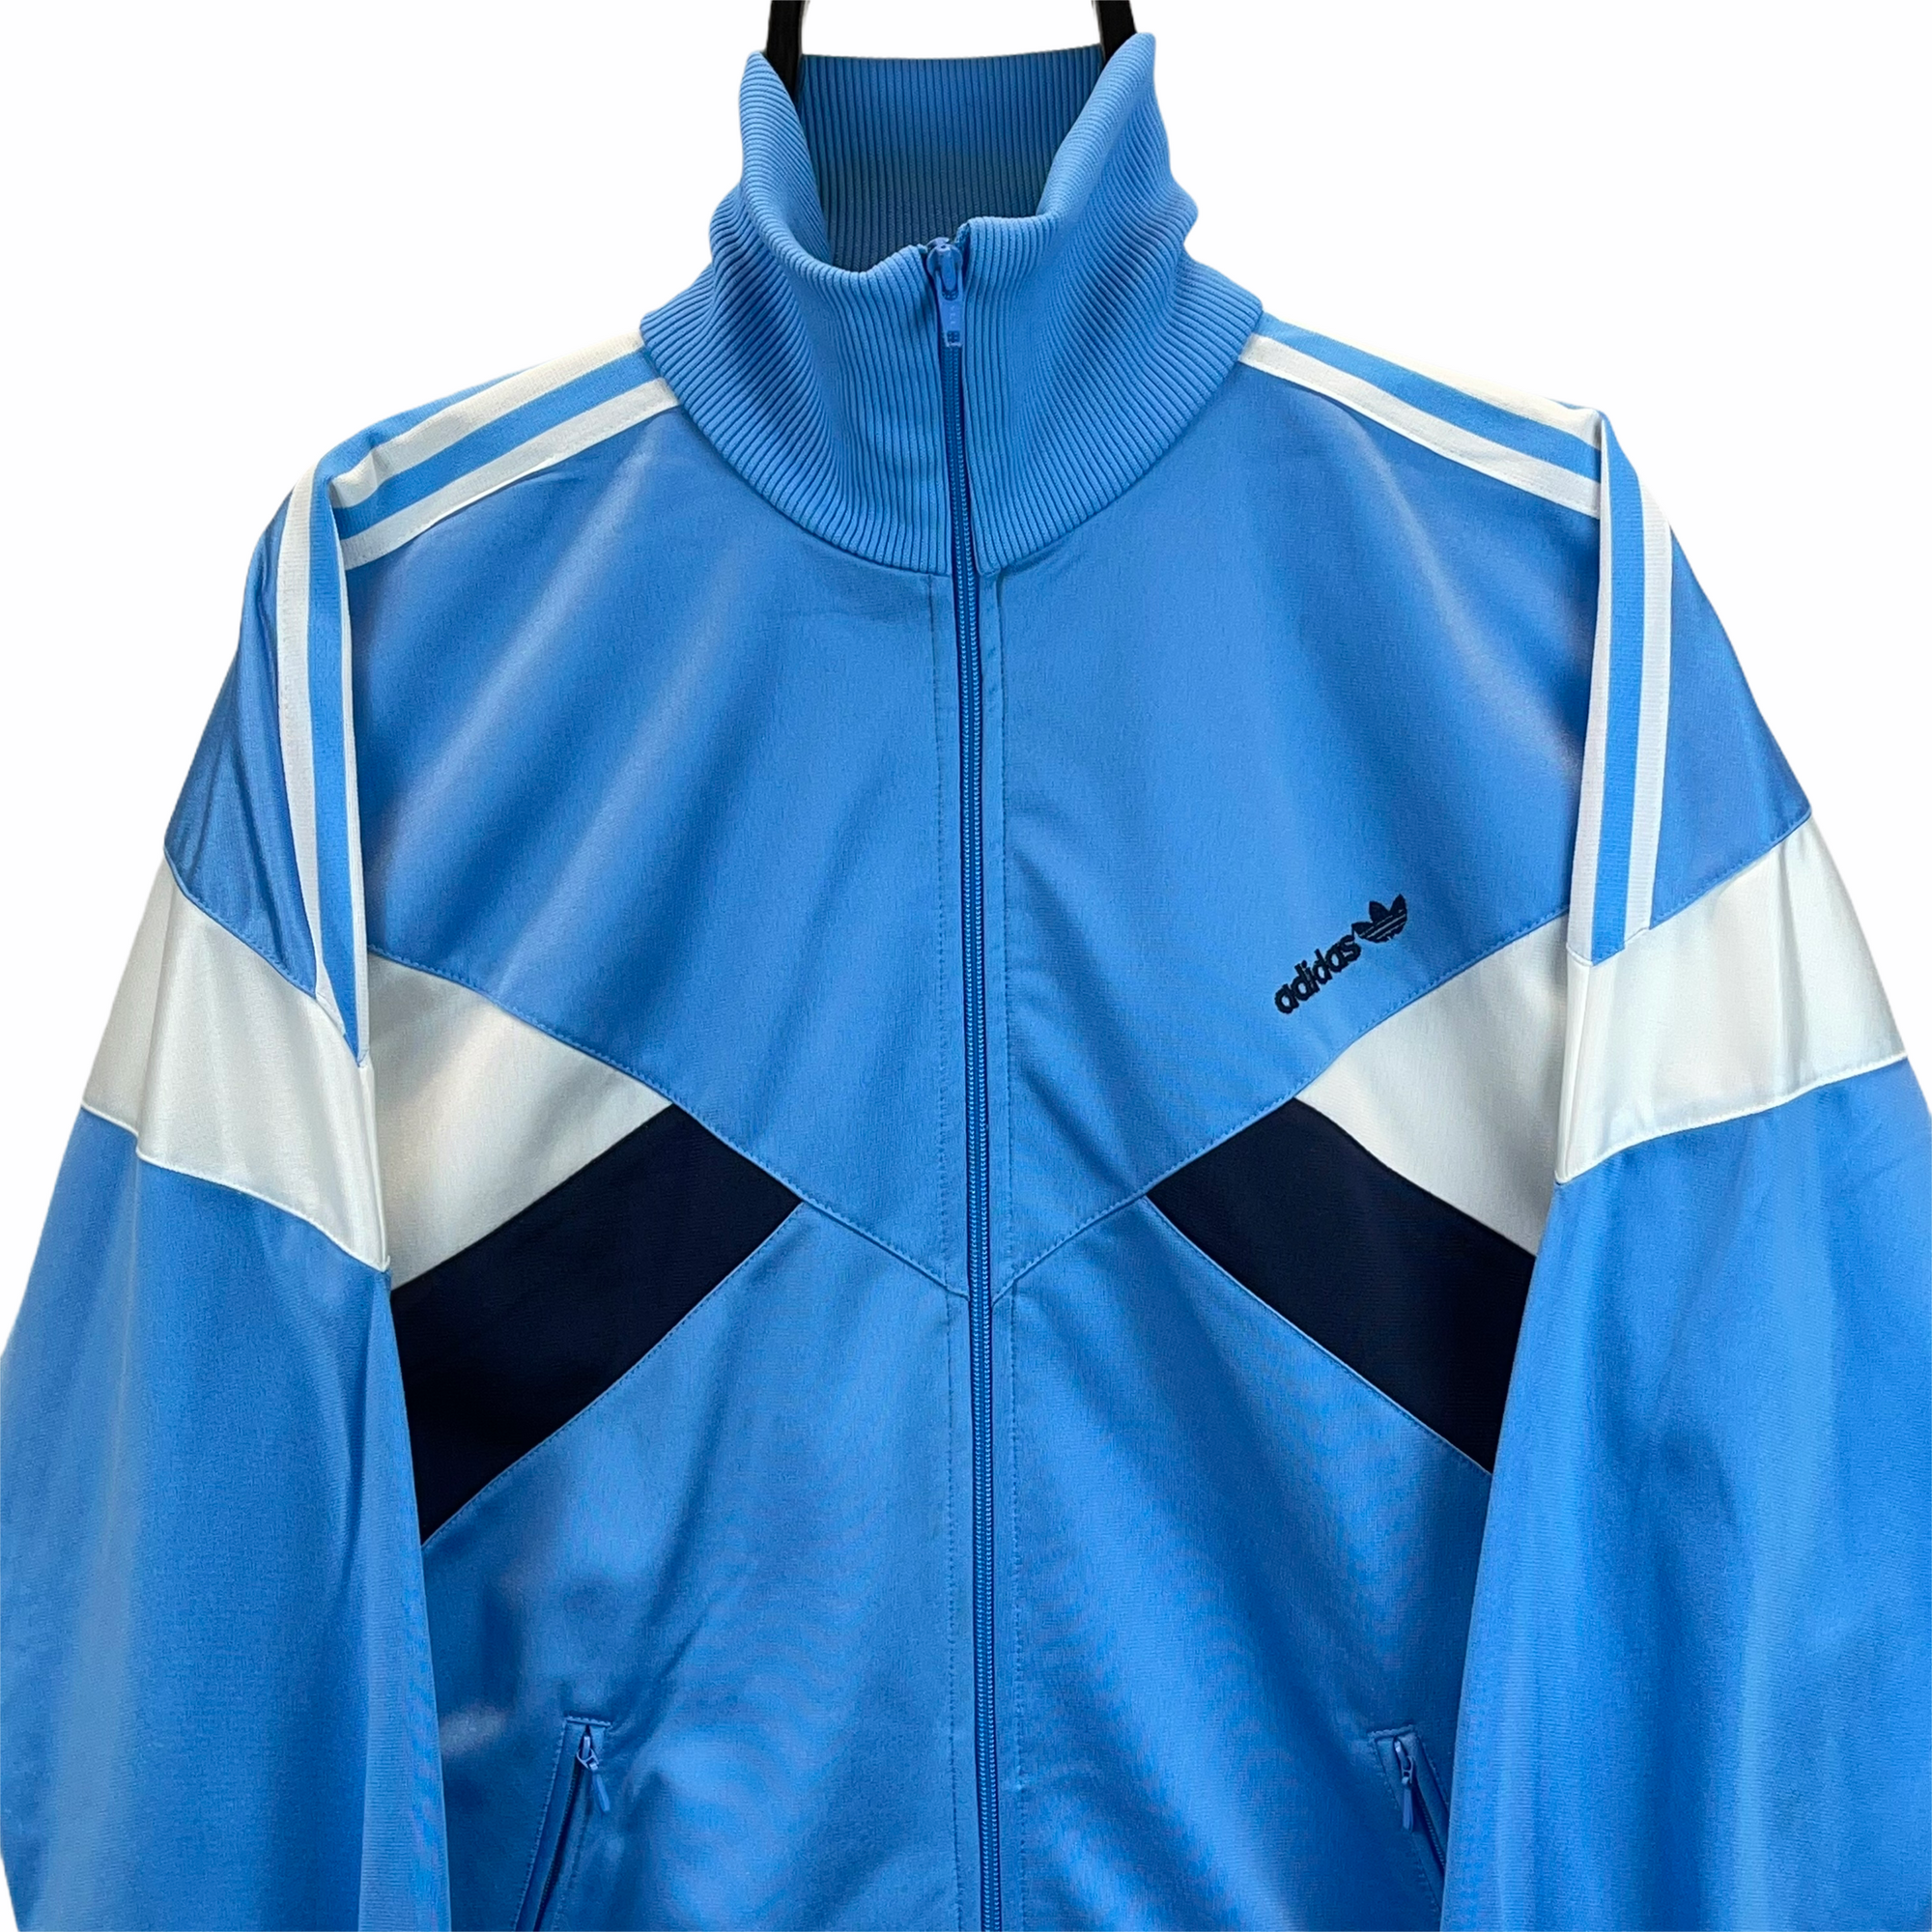 Vintage 90s Adidas Track Jacket in Baby Blue, Navy & White - Men's Medium/Women's Large